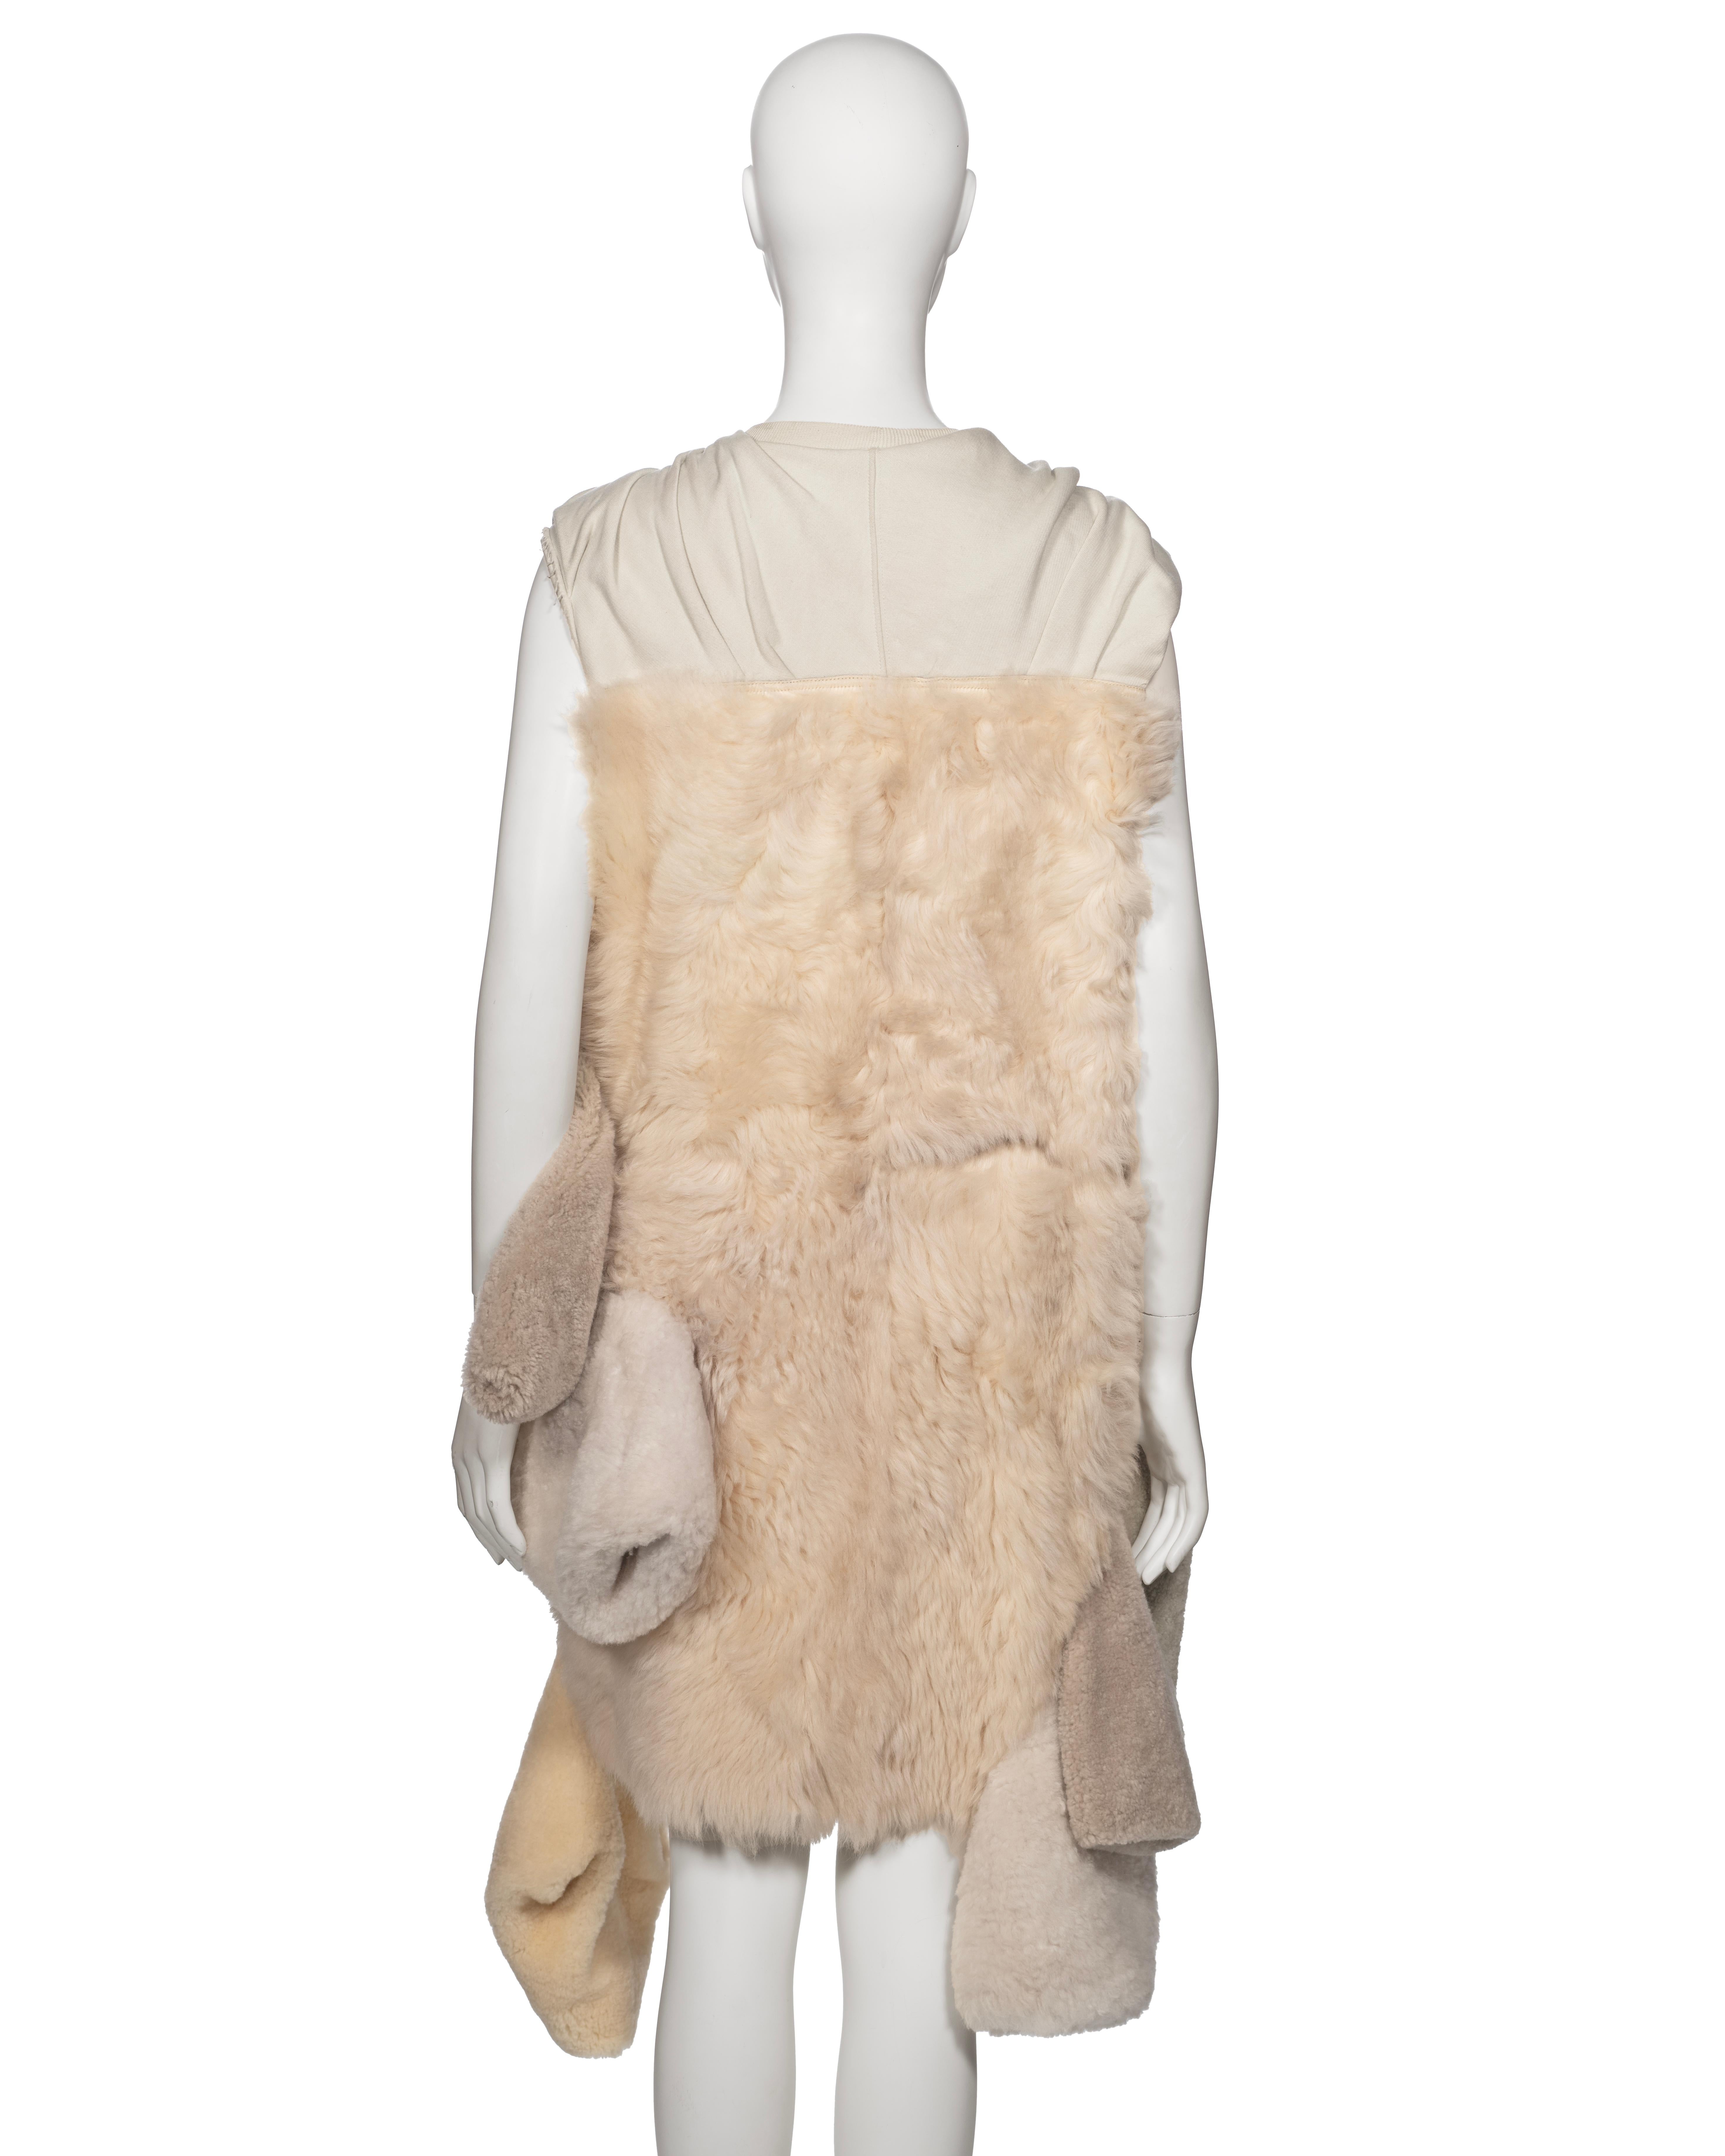 Rick Owens Unisex Draped Shearling 'Mastodon' Dress, fw 2016 For Sale 6